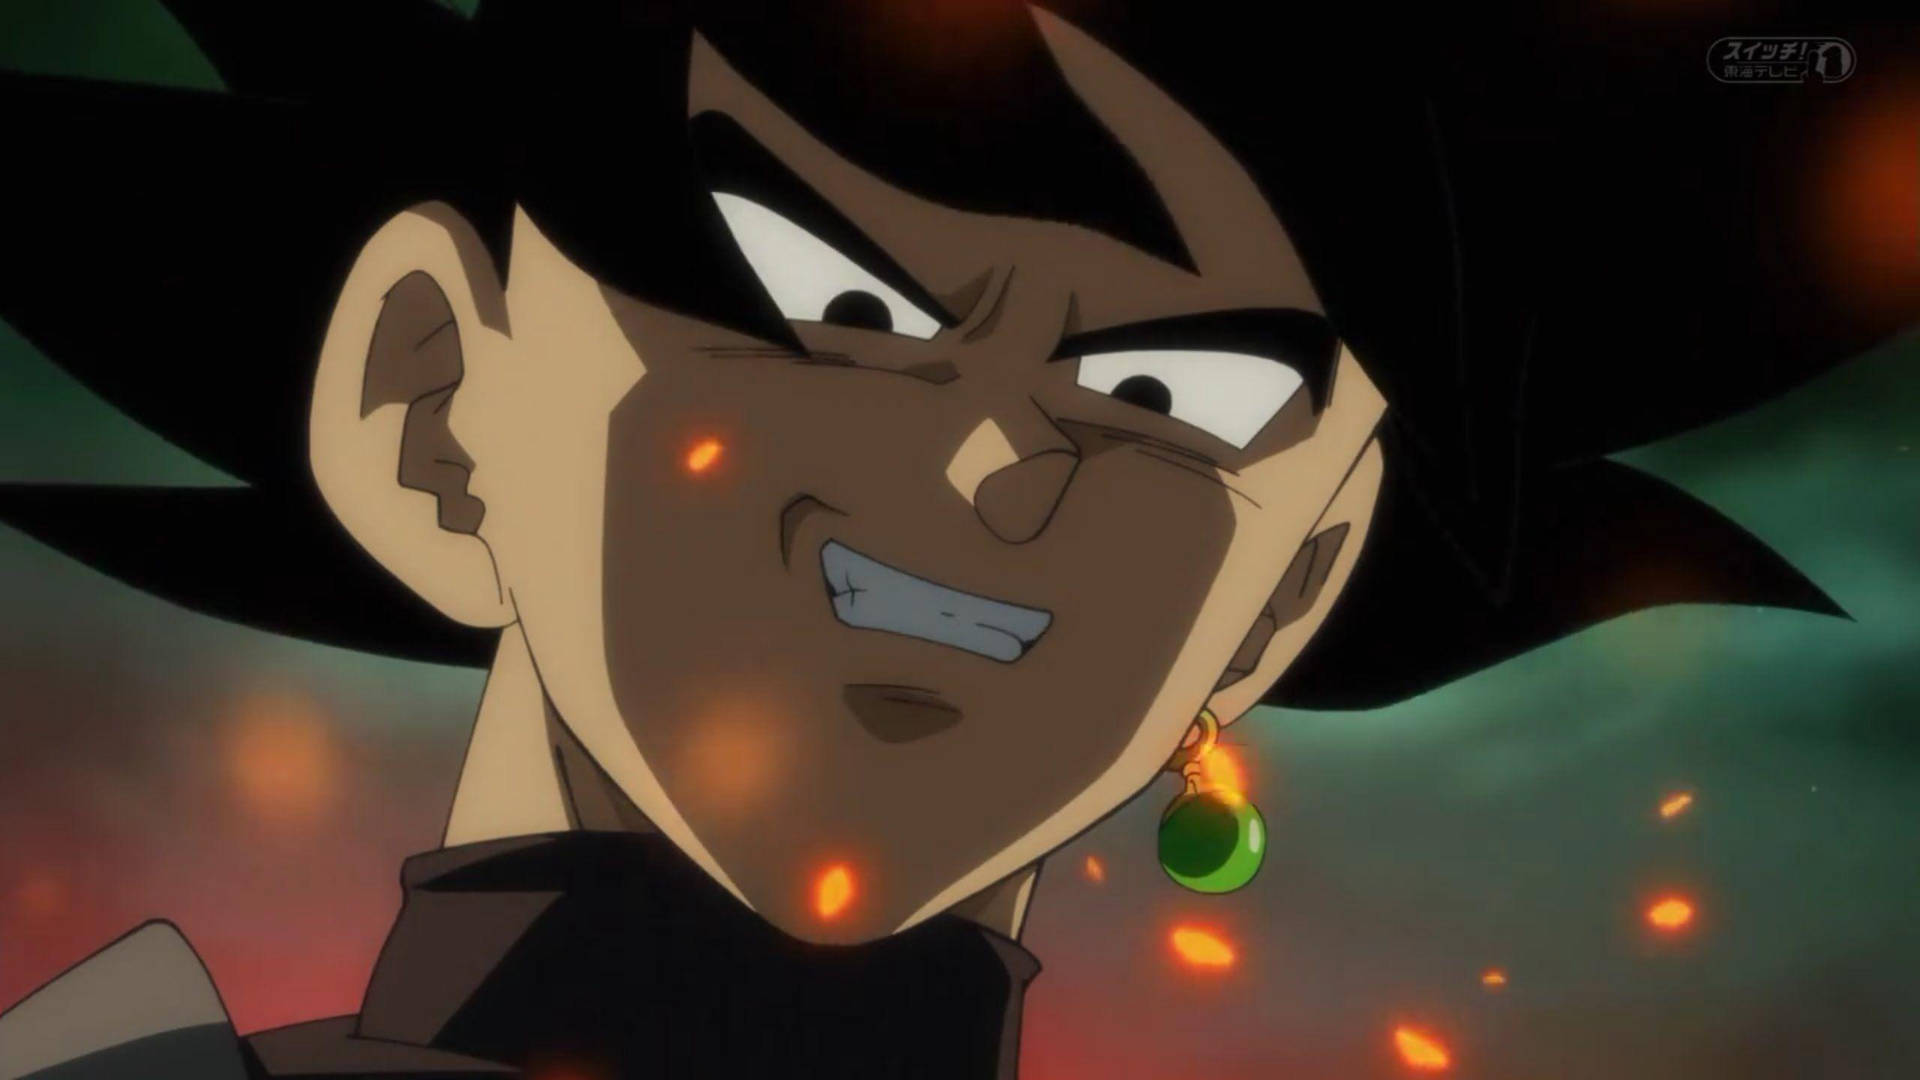 Black Goku Grinning Maniacally